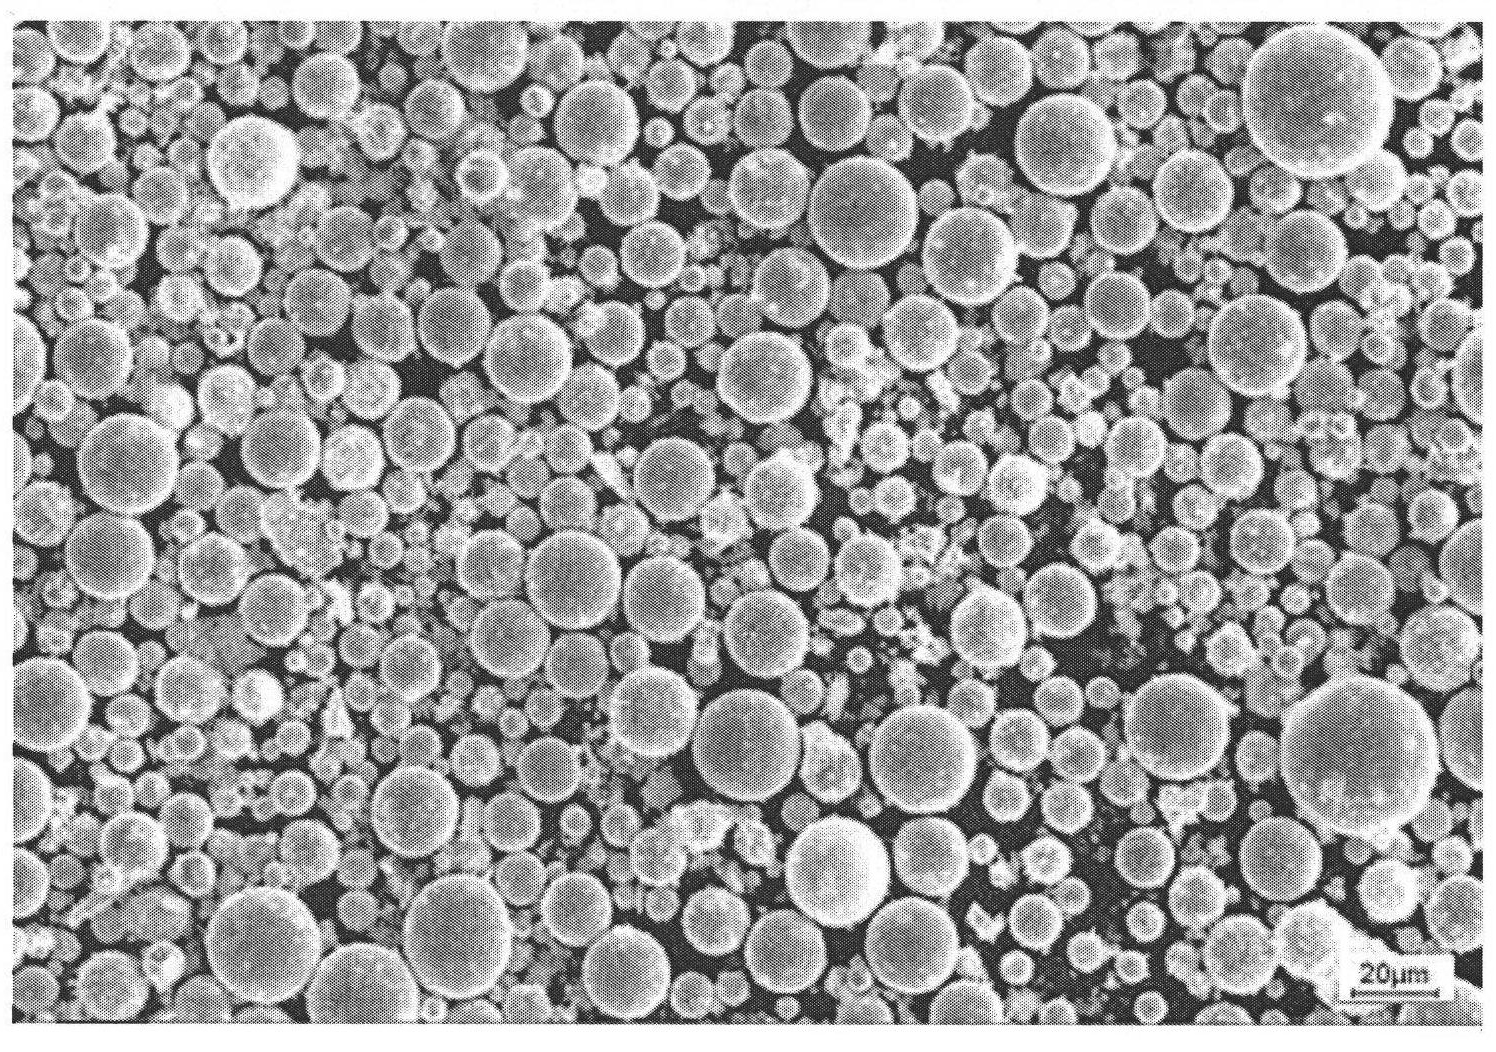 Method for largely preparing superfine spherical titanium aluminium-based alloyed powder